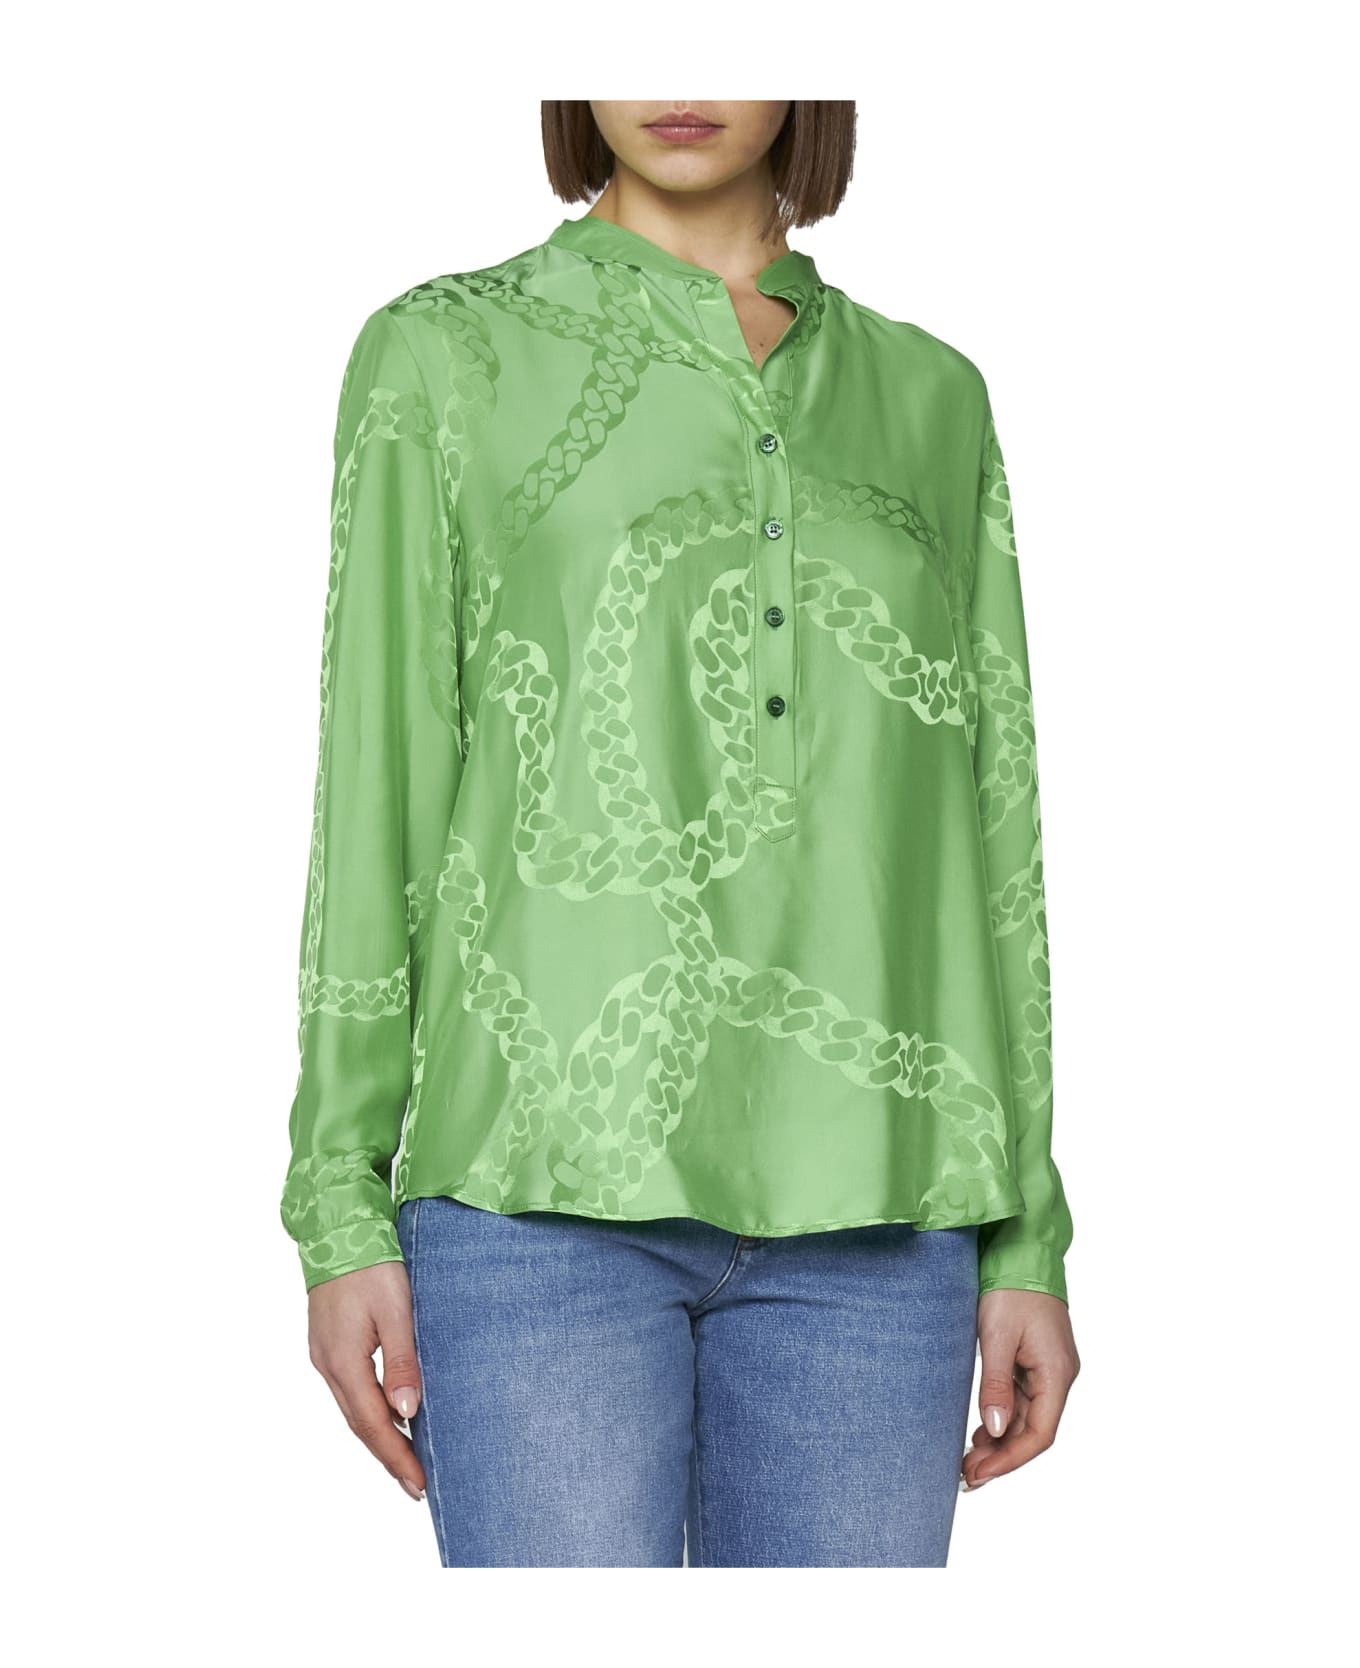 Stella McCartney Motif Printed Buttoned Shirt - Green ブラウス